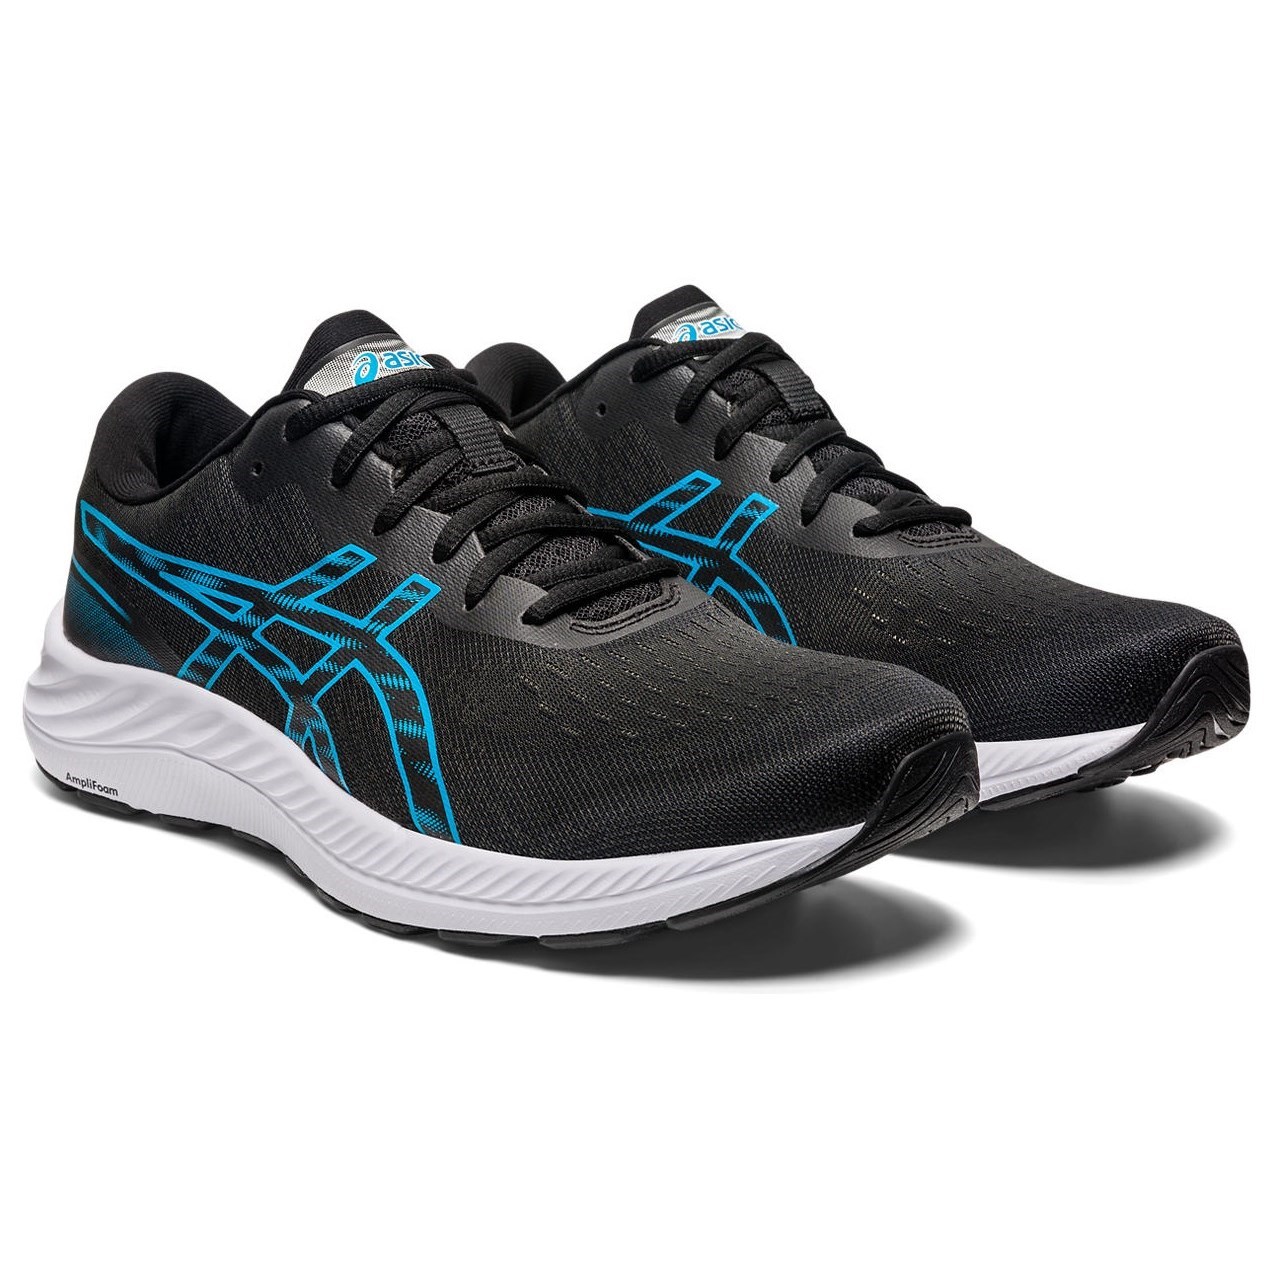 Asics Gel Excite 9 - Mens Running Shoes - Black/Island Blue | Sportitude